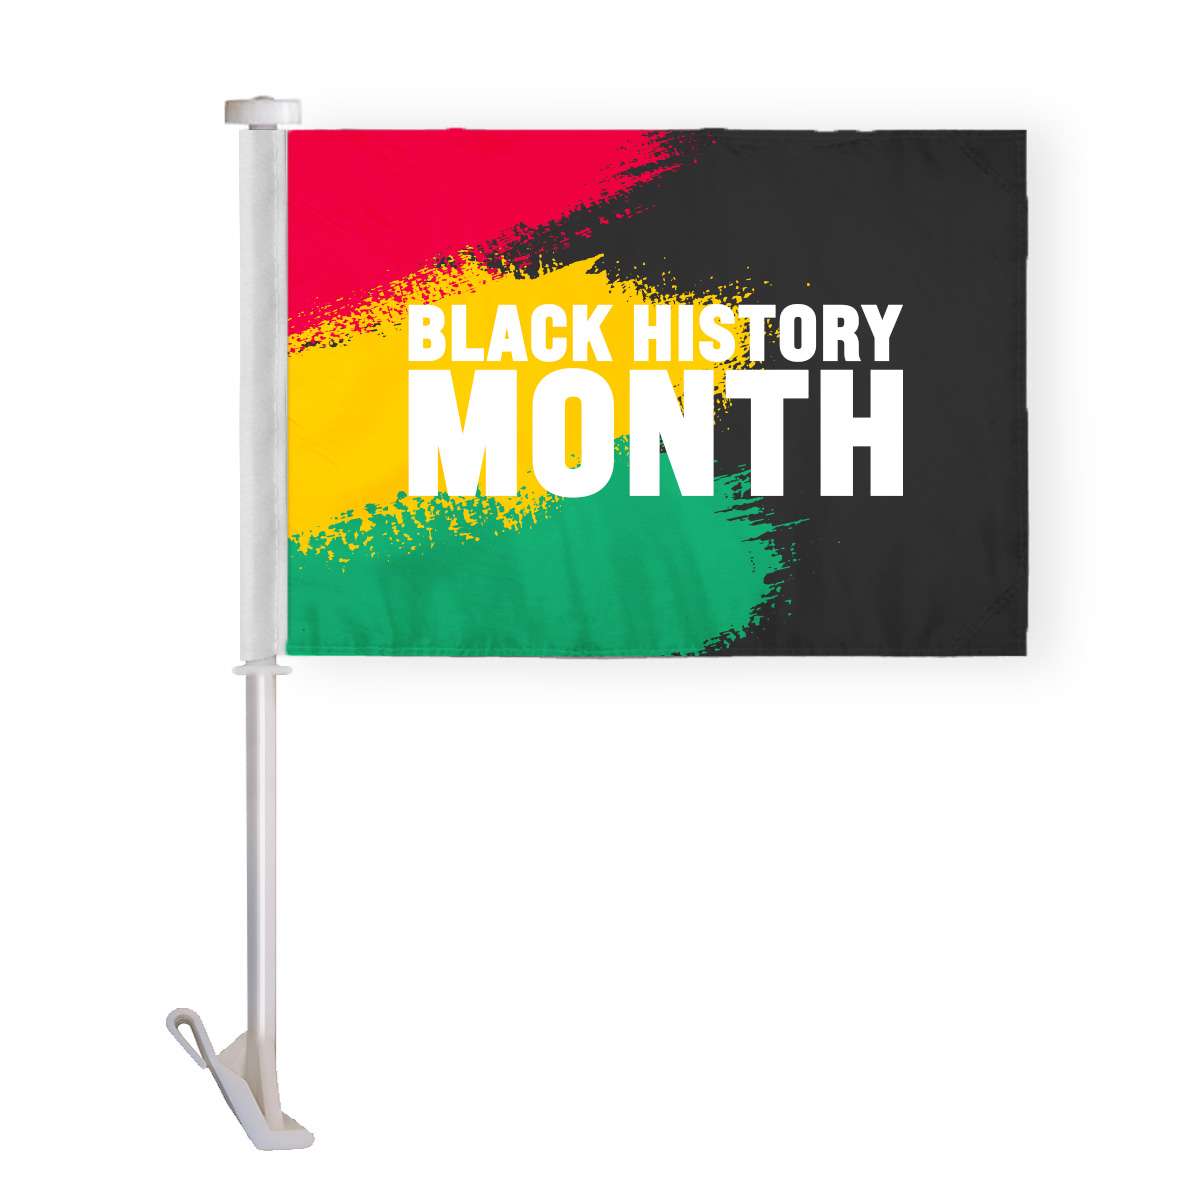 AGAS Black History Month Auto Decoration Juneteenth